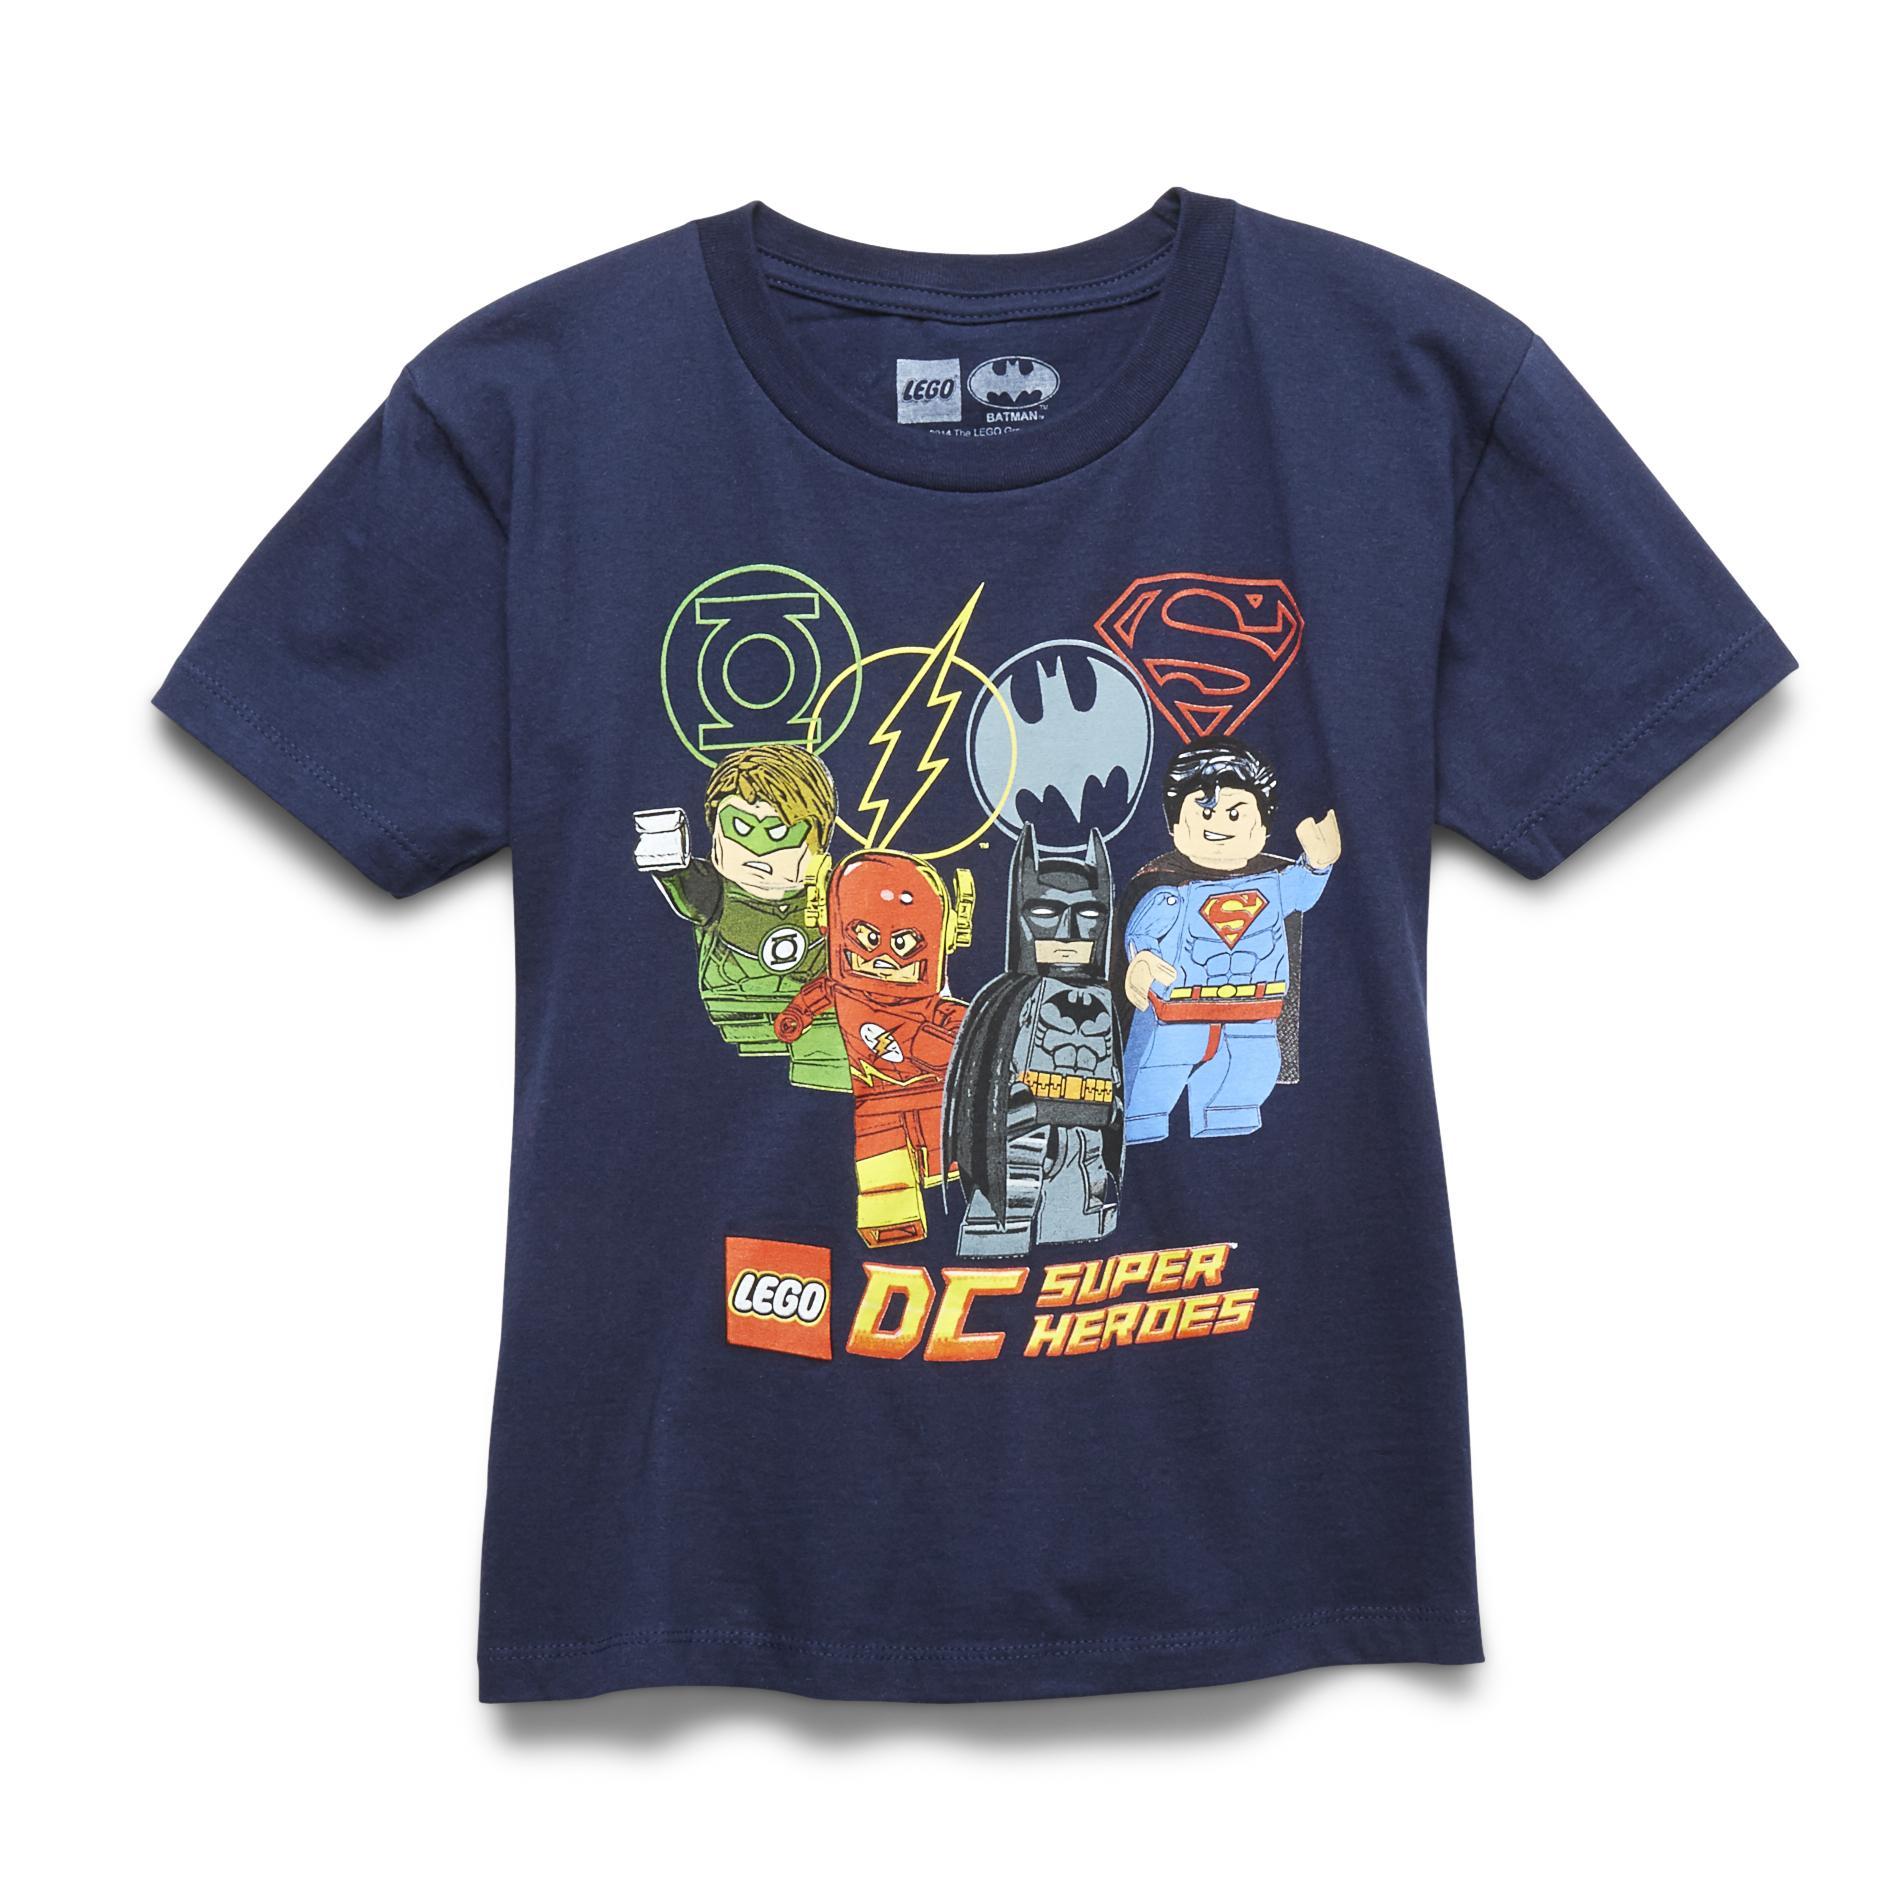 LEGO Boy's Graphic T-Shirt - DC Superheroes